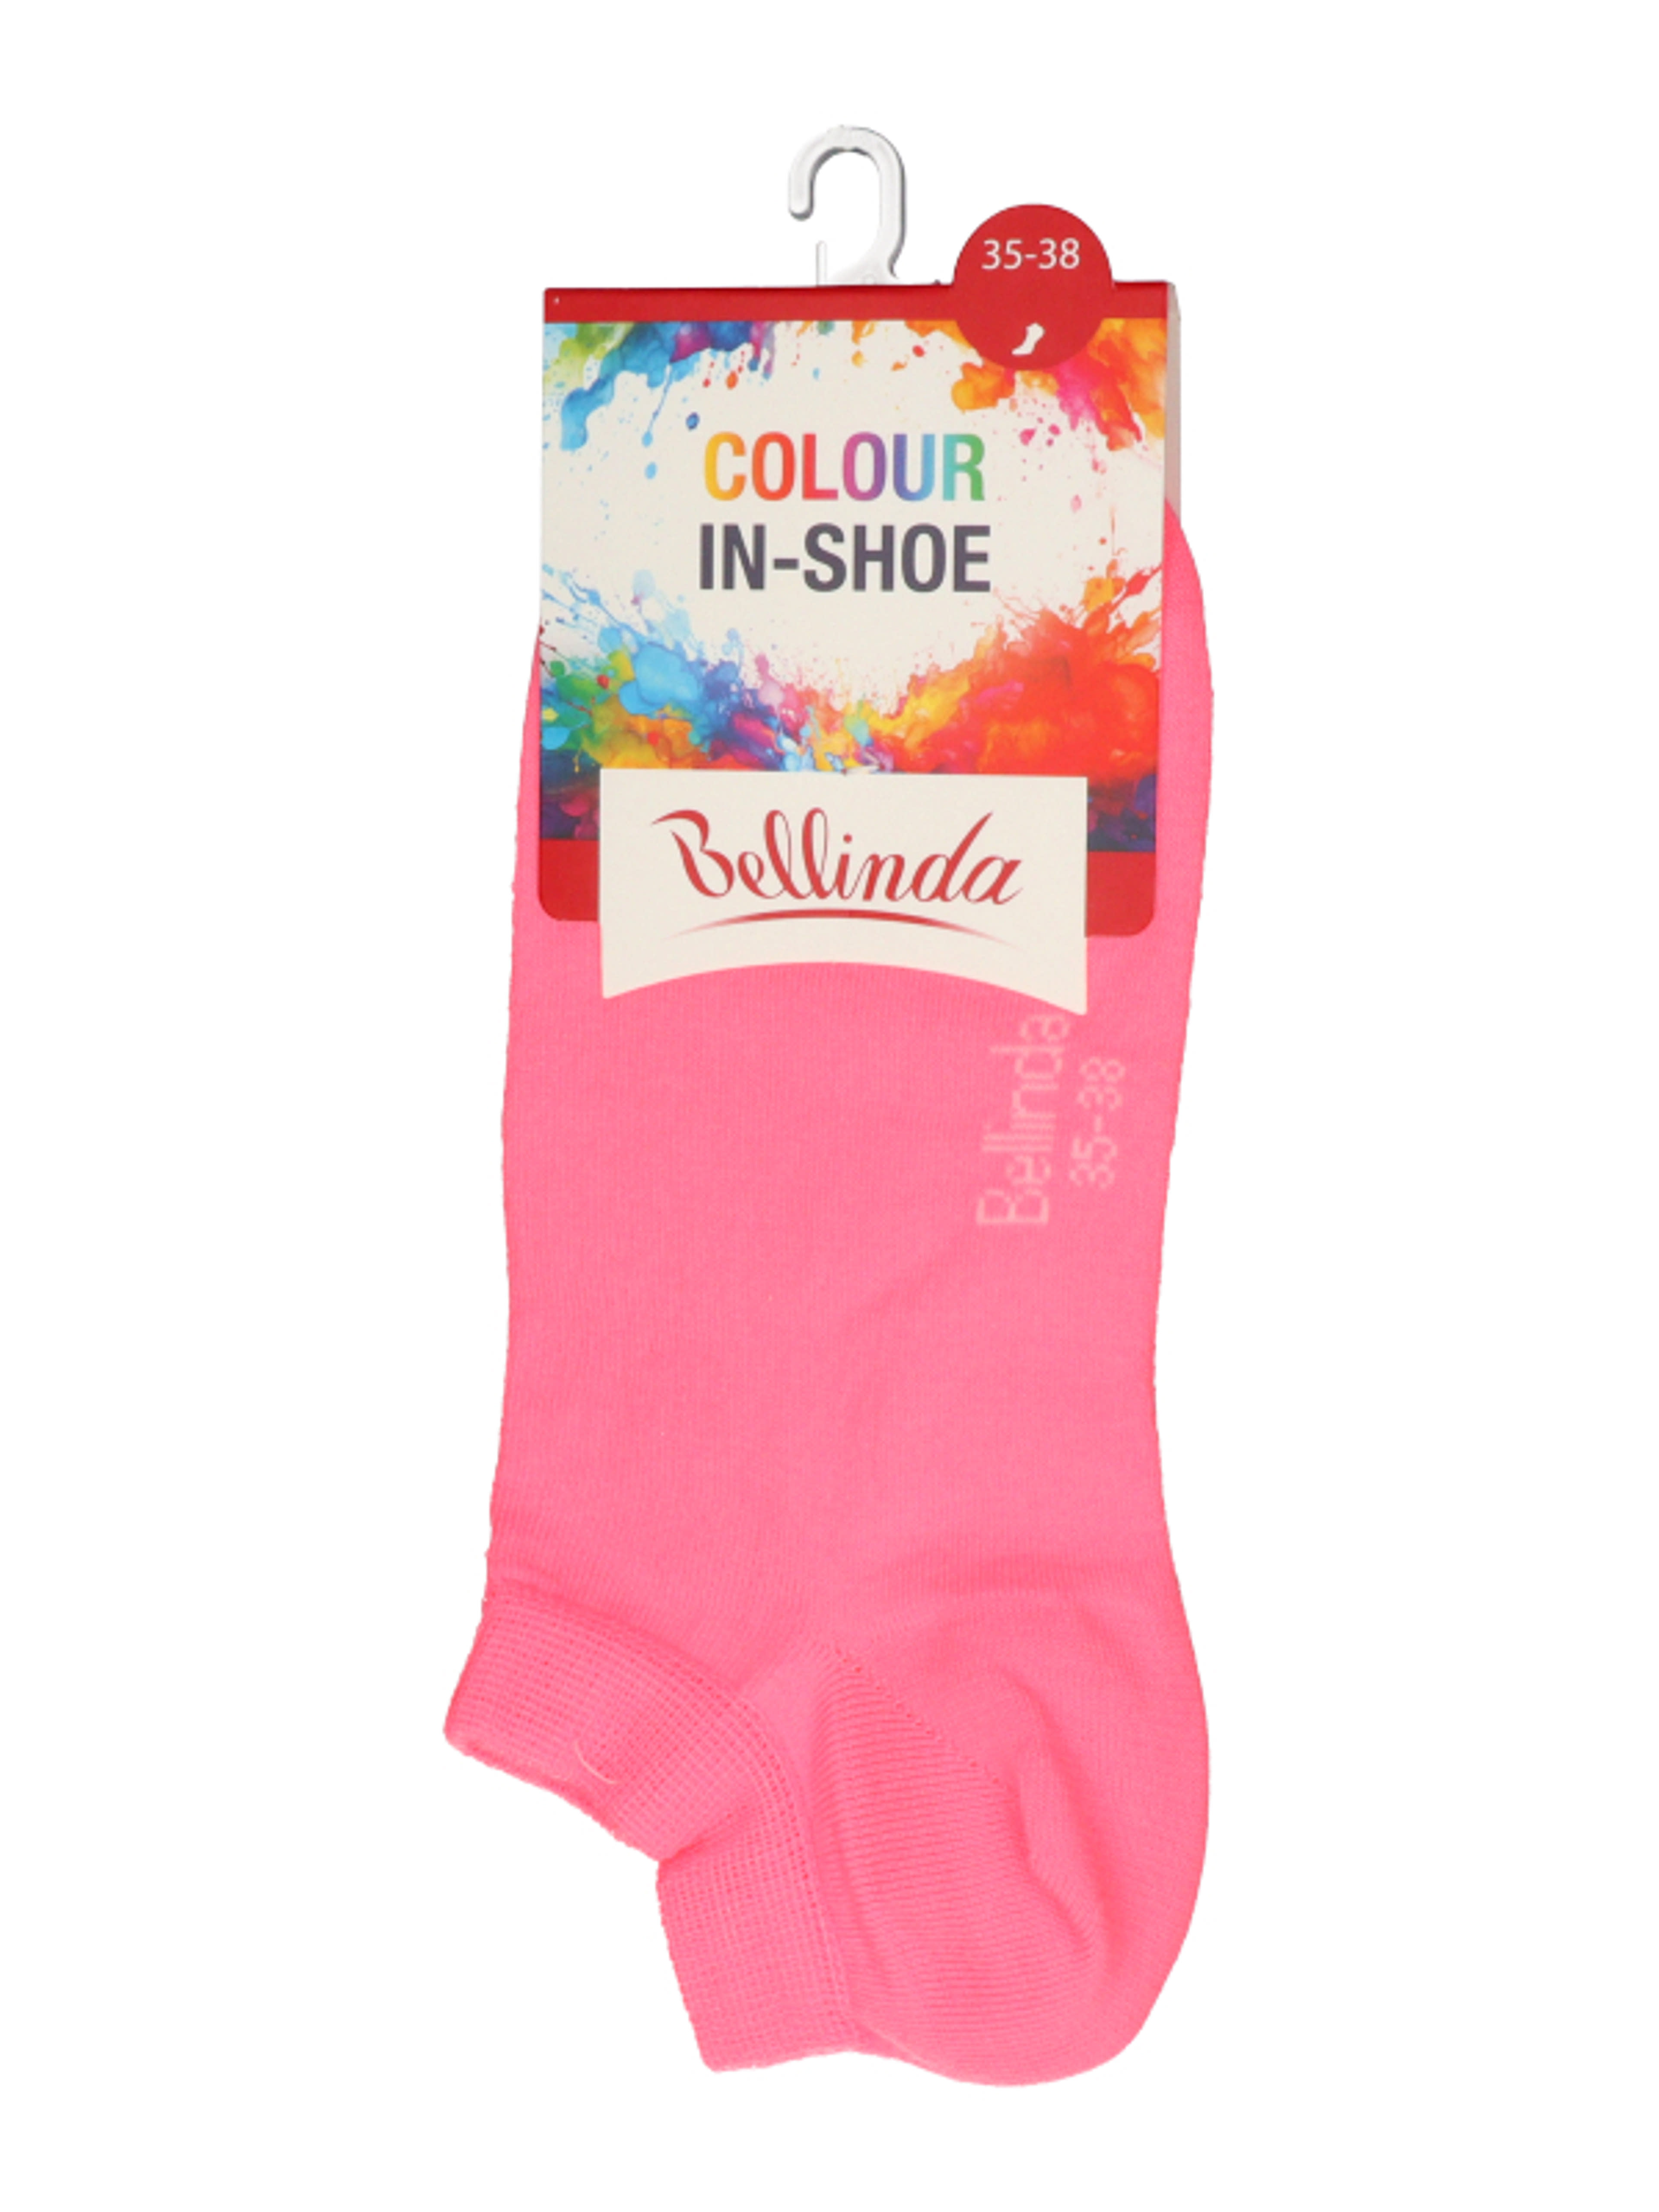 Bellinda In-Shoe női zokni /neon rózsaszín 35-38 - 1 db